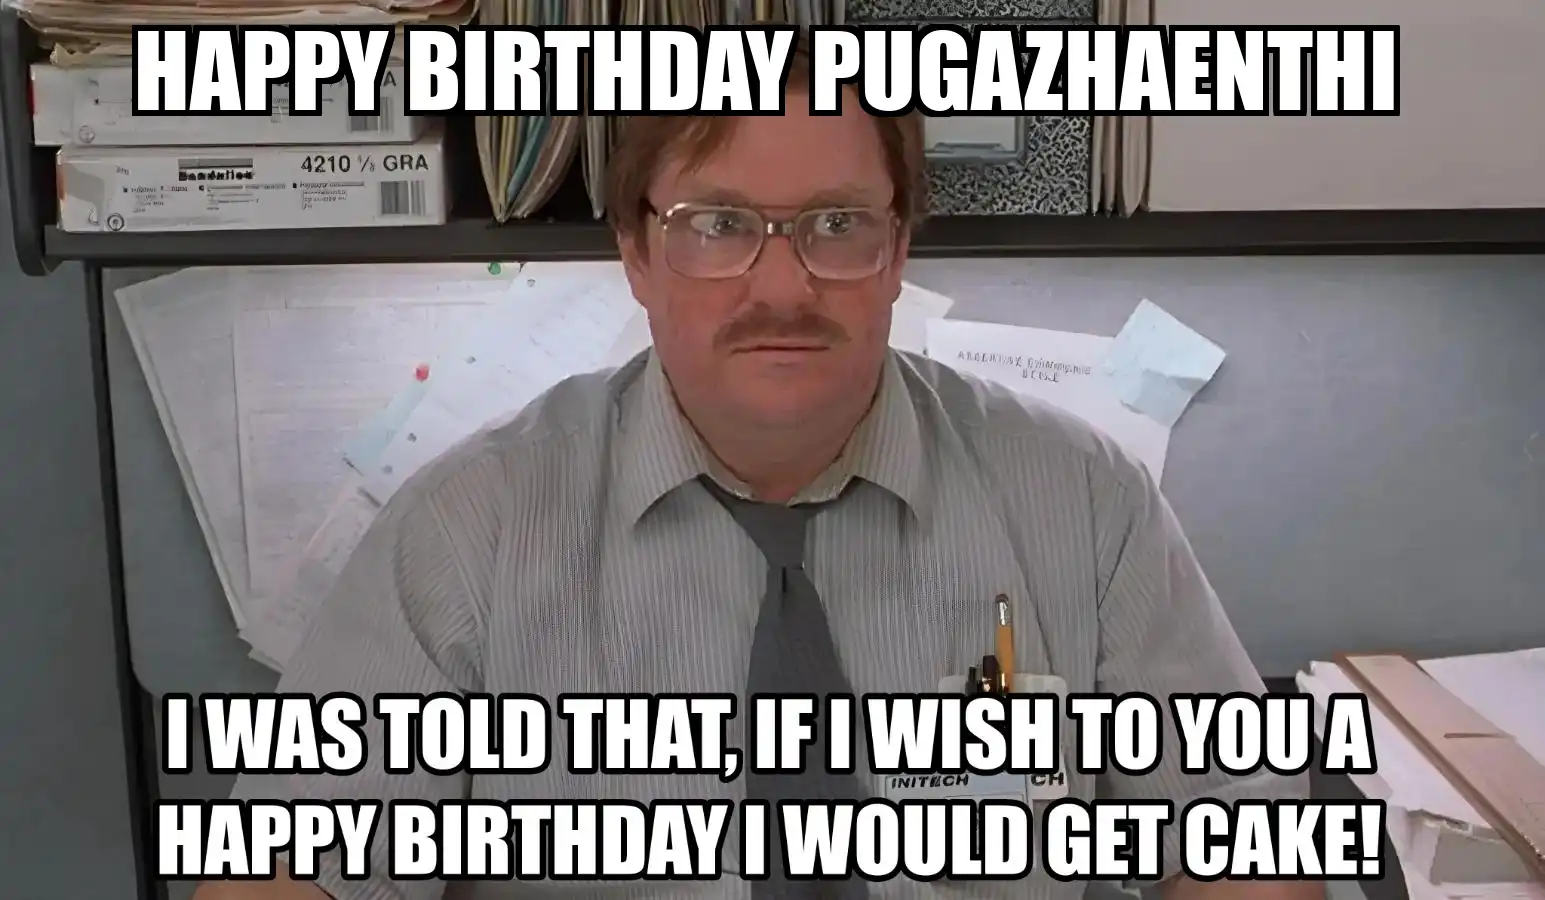 Happy Birthday Pugazhaenthi I Would Get A Cake Meme